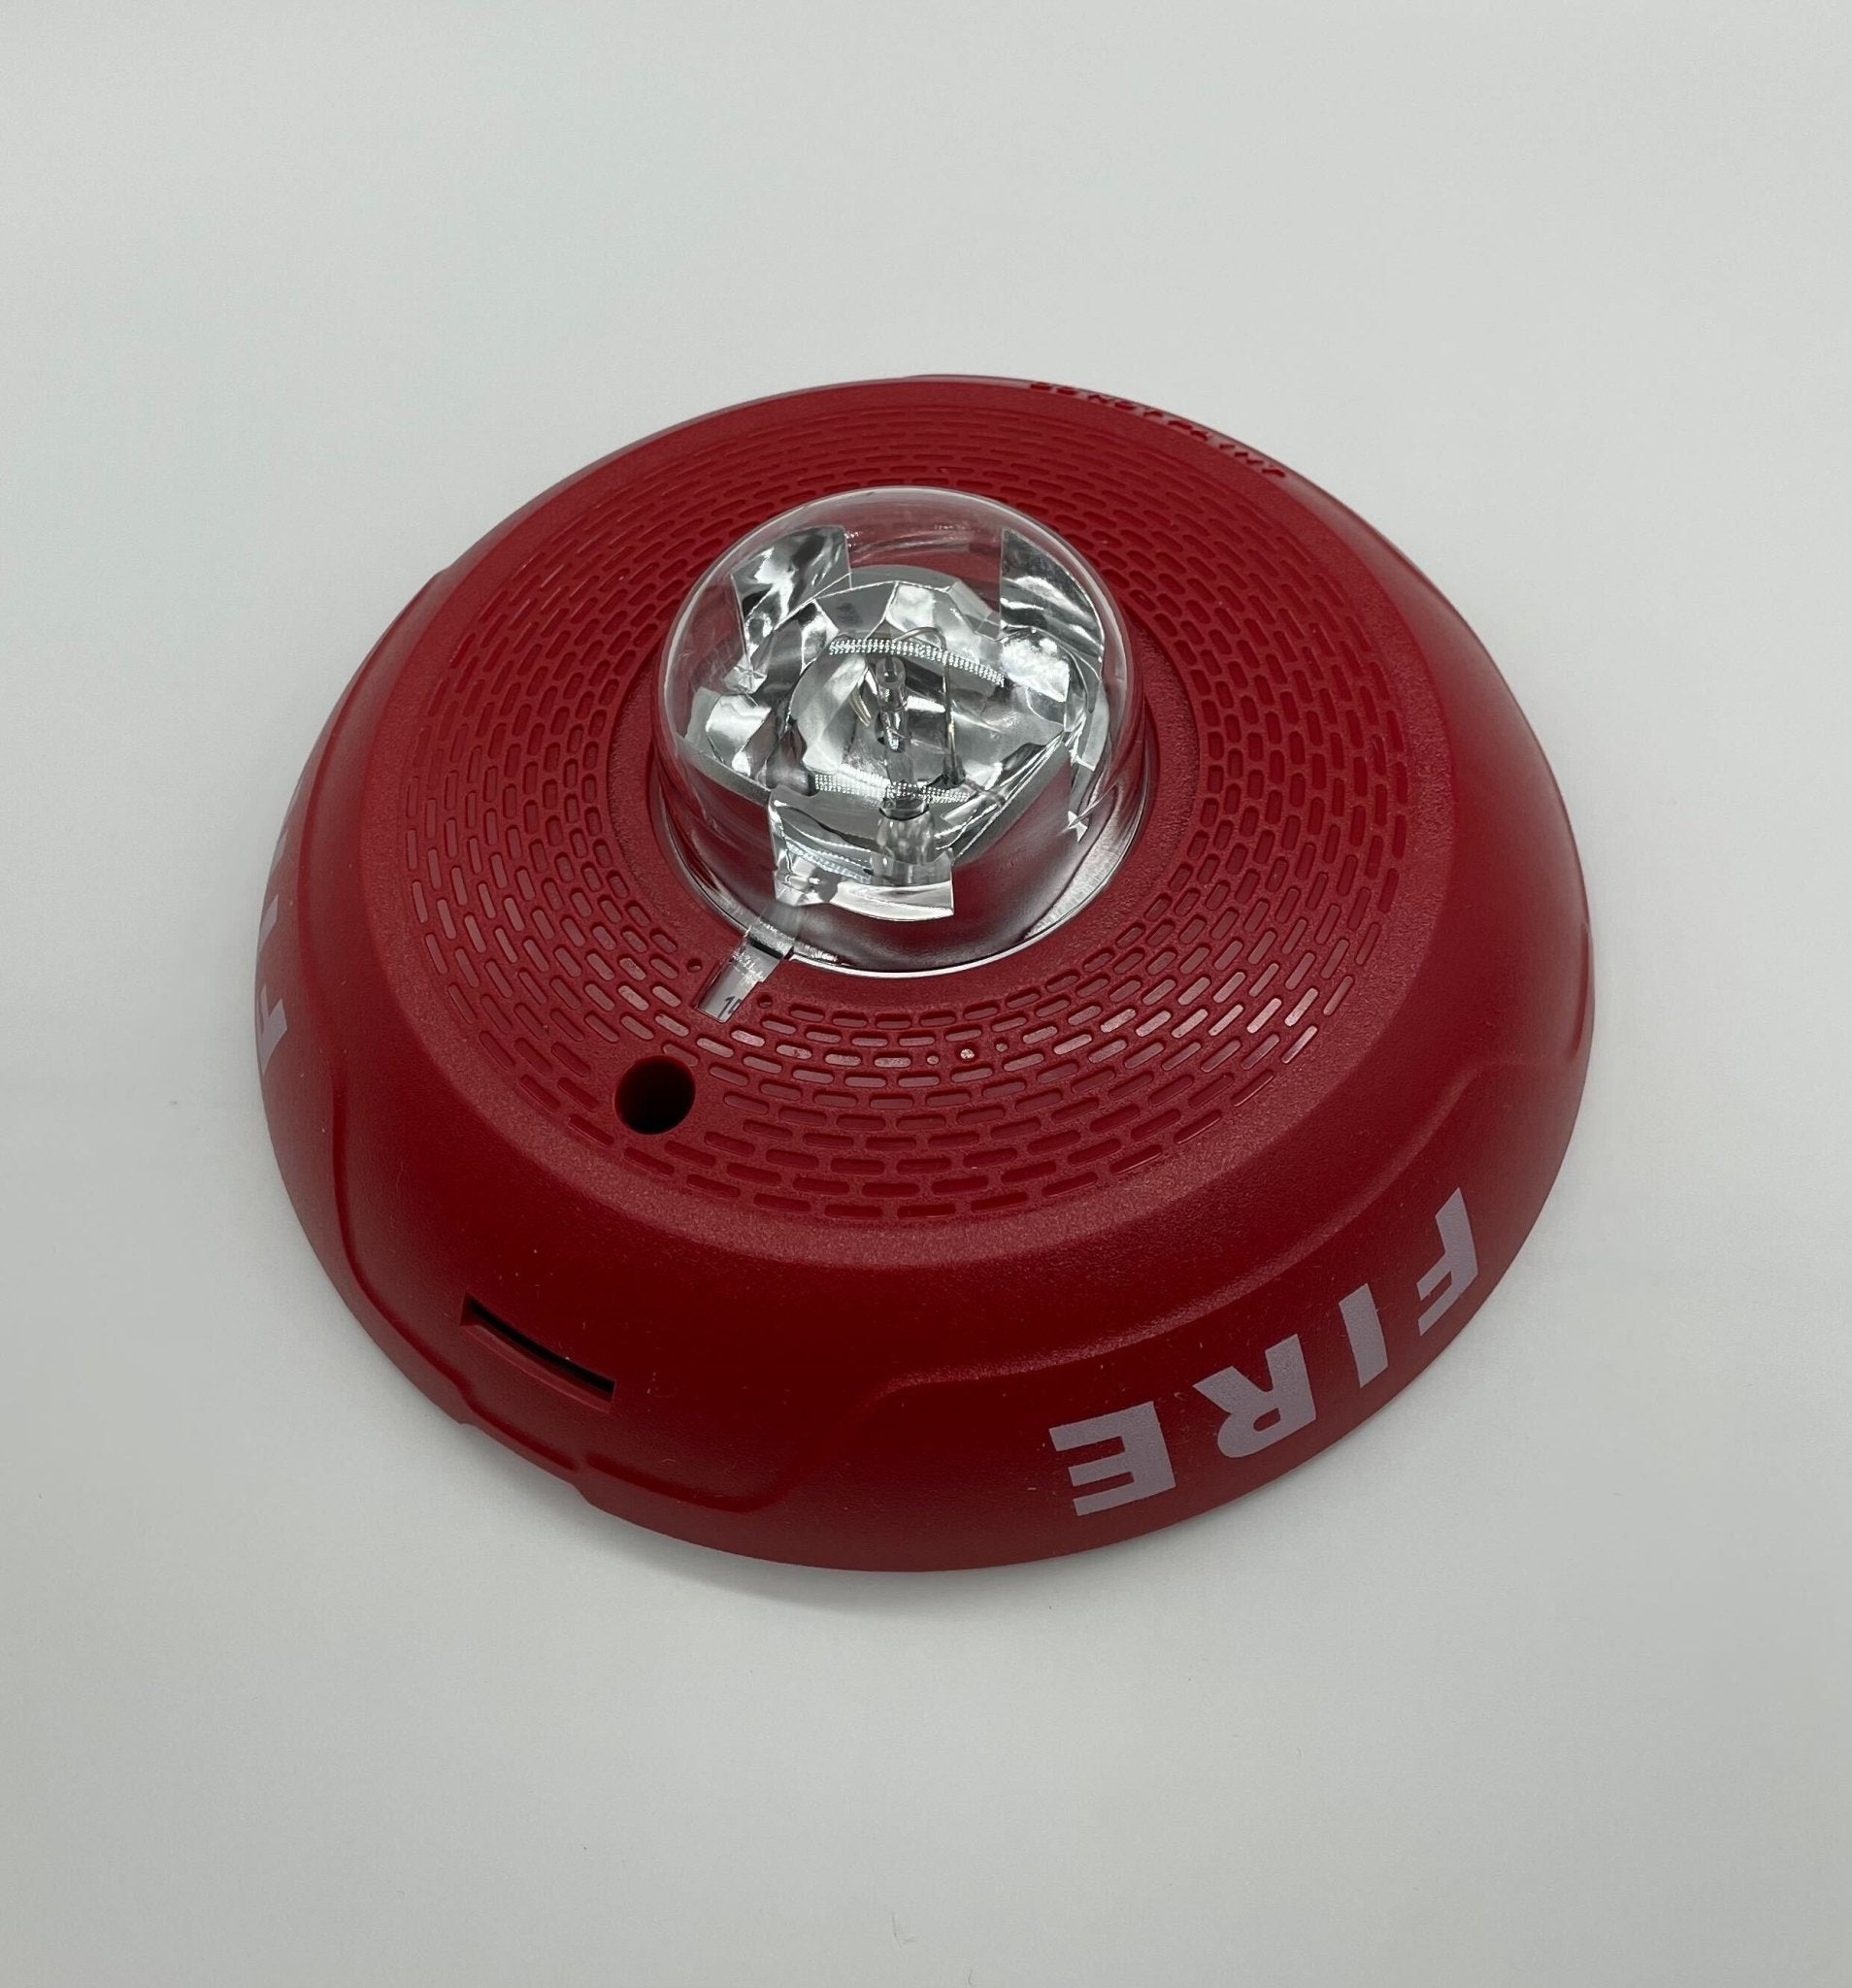 System Sensor SCRL - The Fire Alarm Supplier